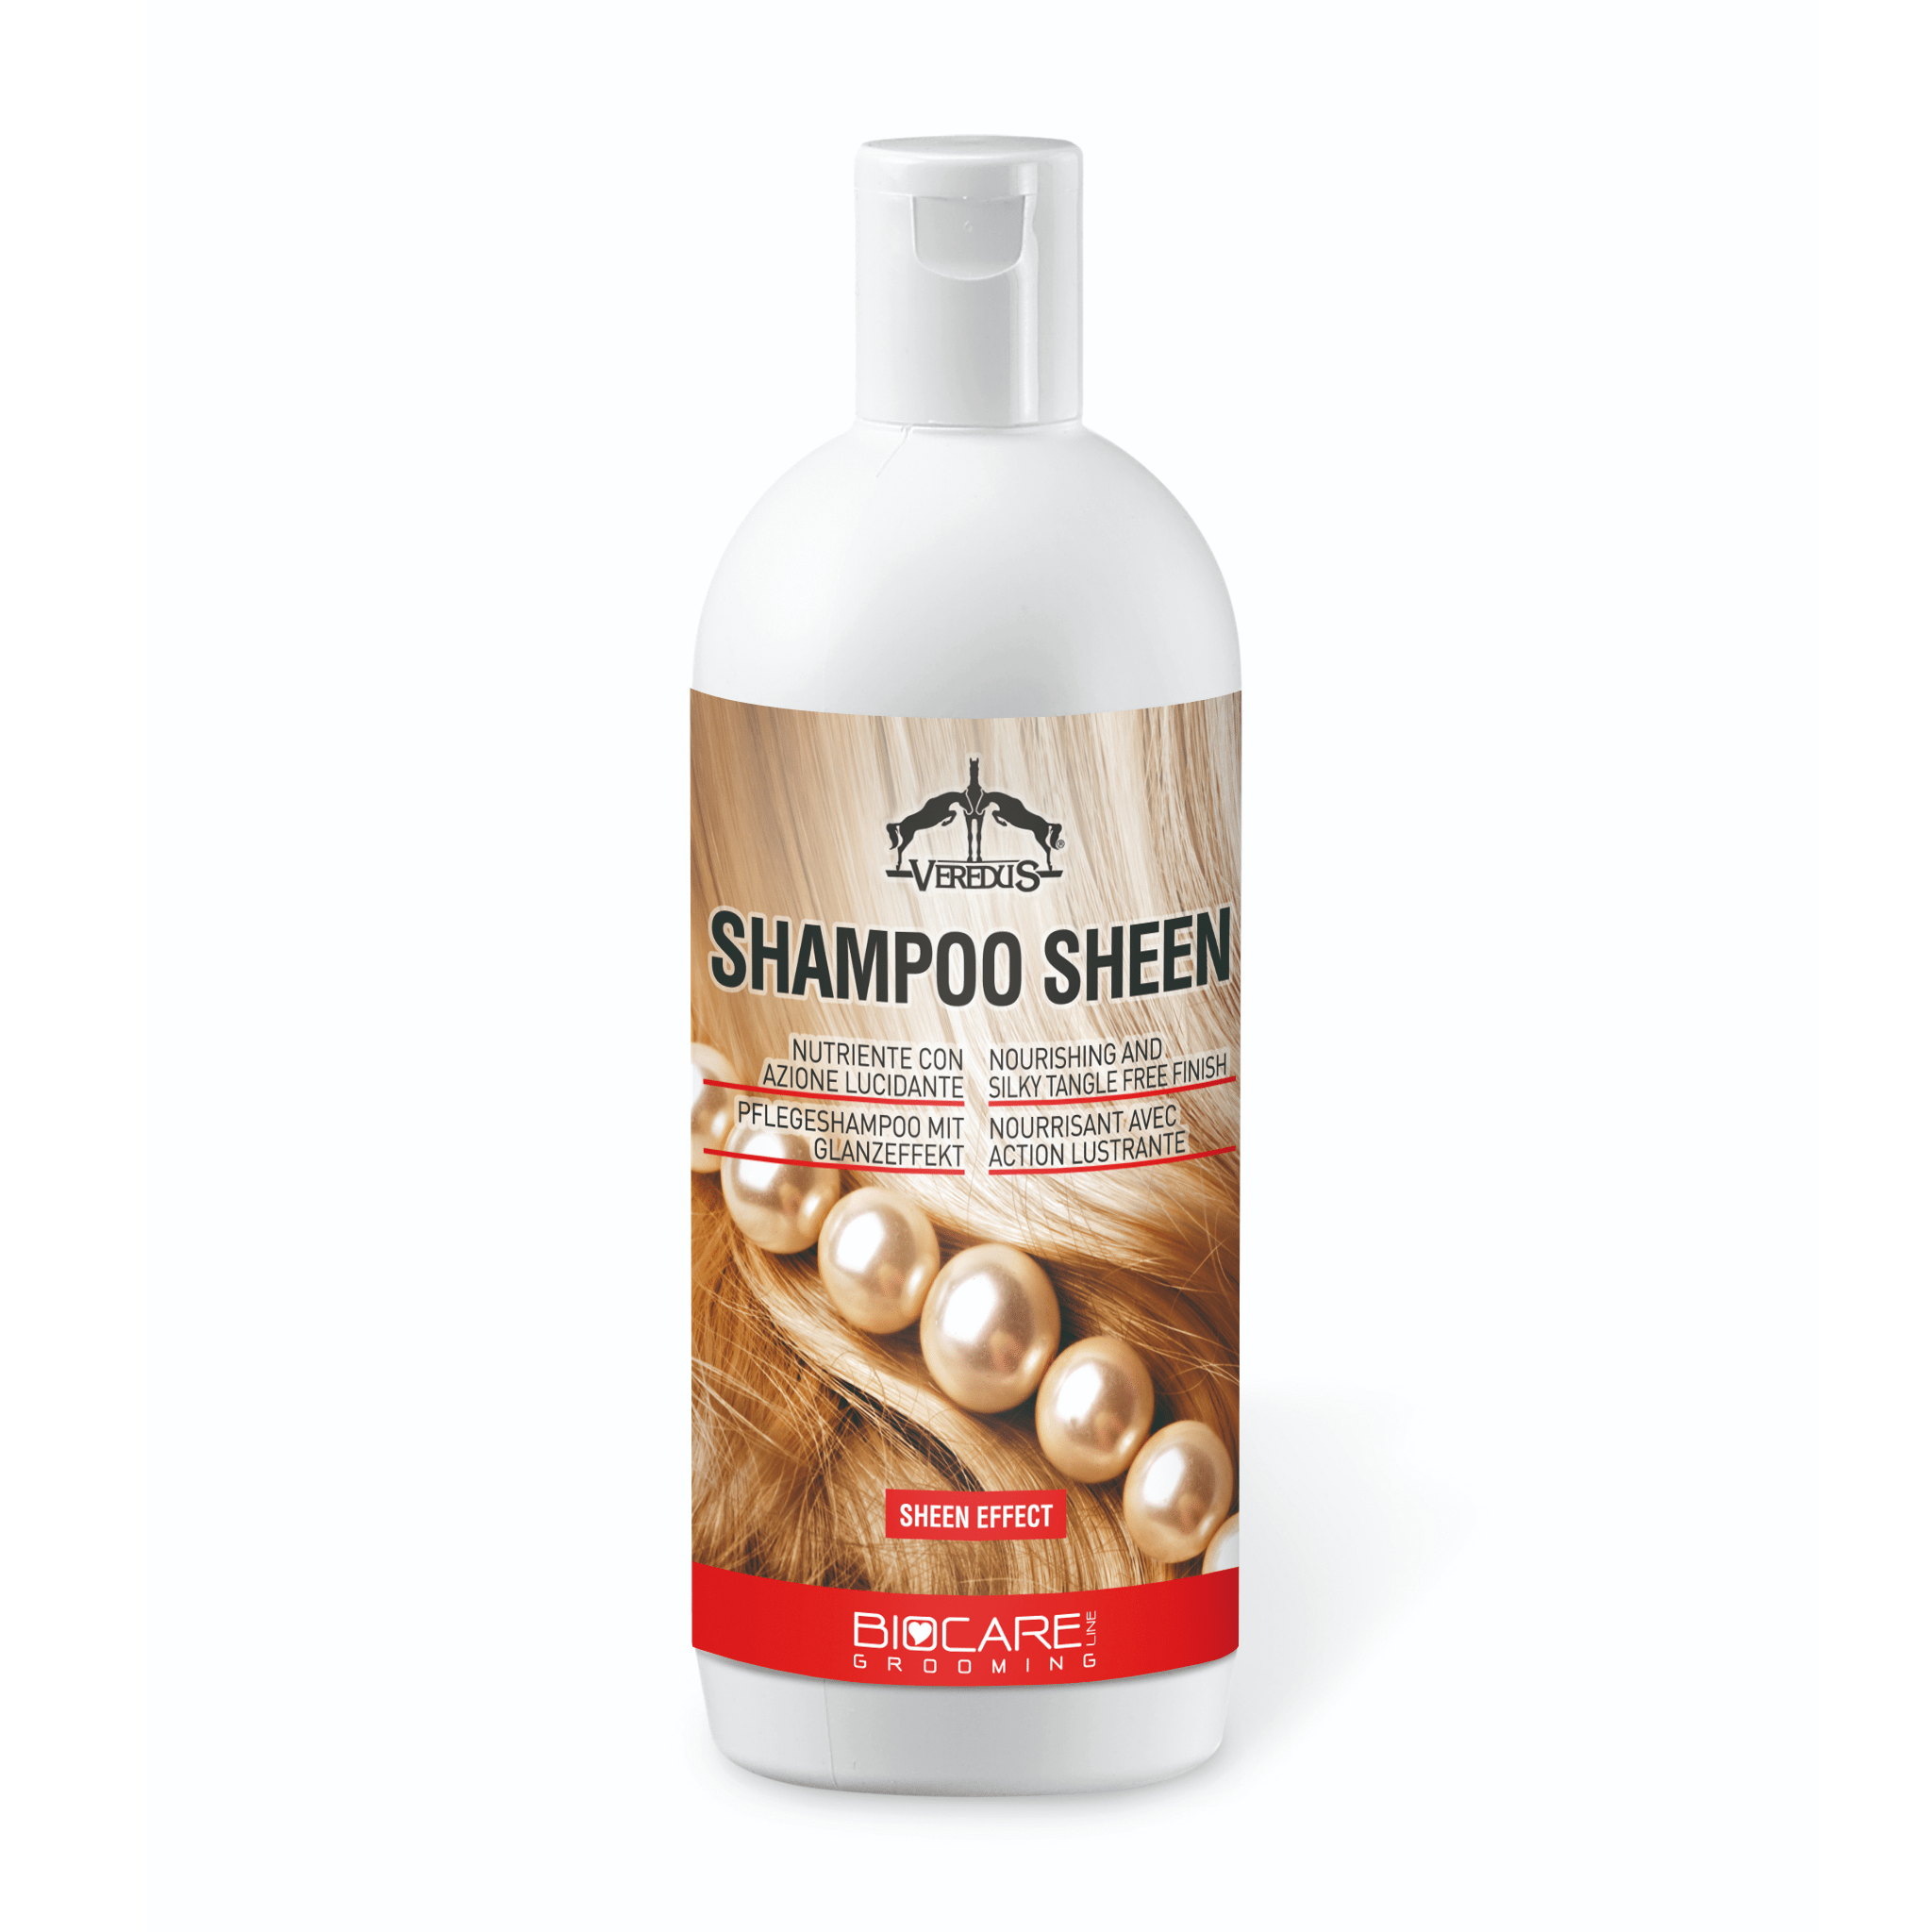 Veredus Shampoo Sheen VISHS500